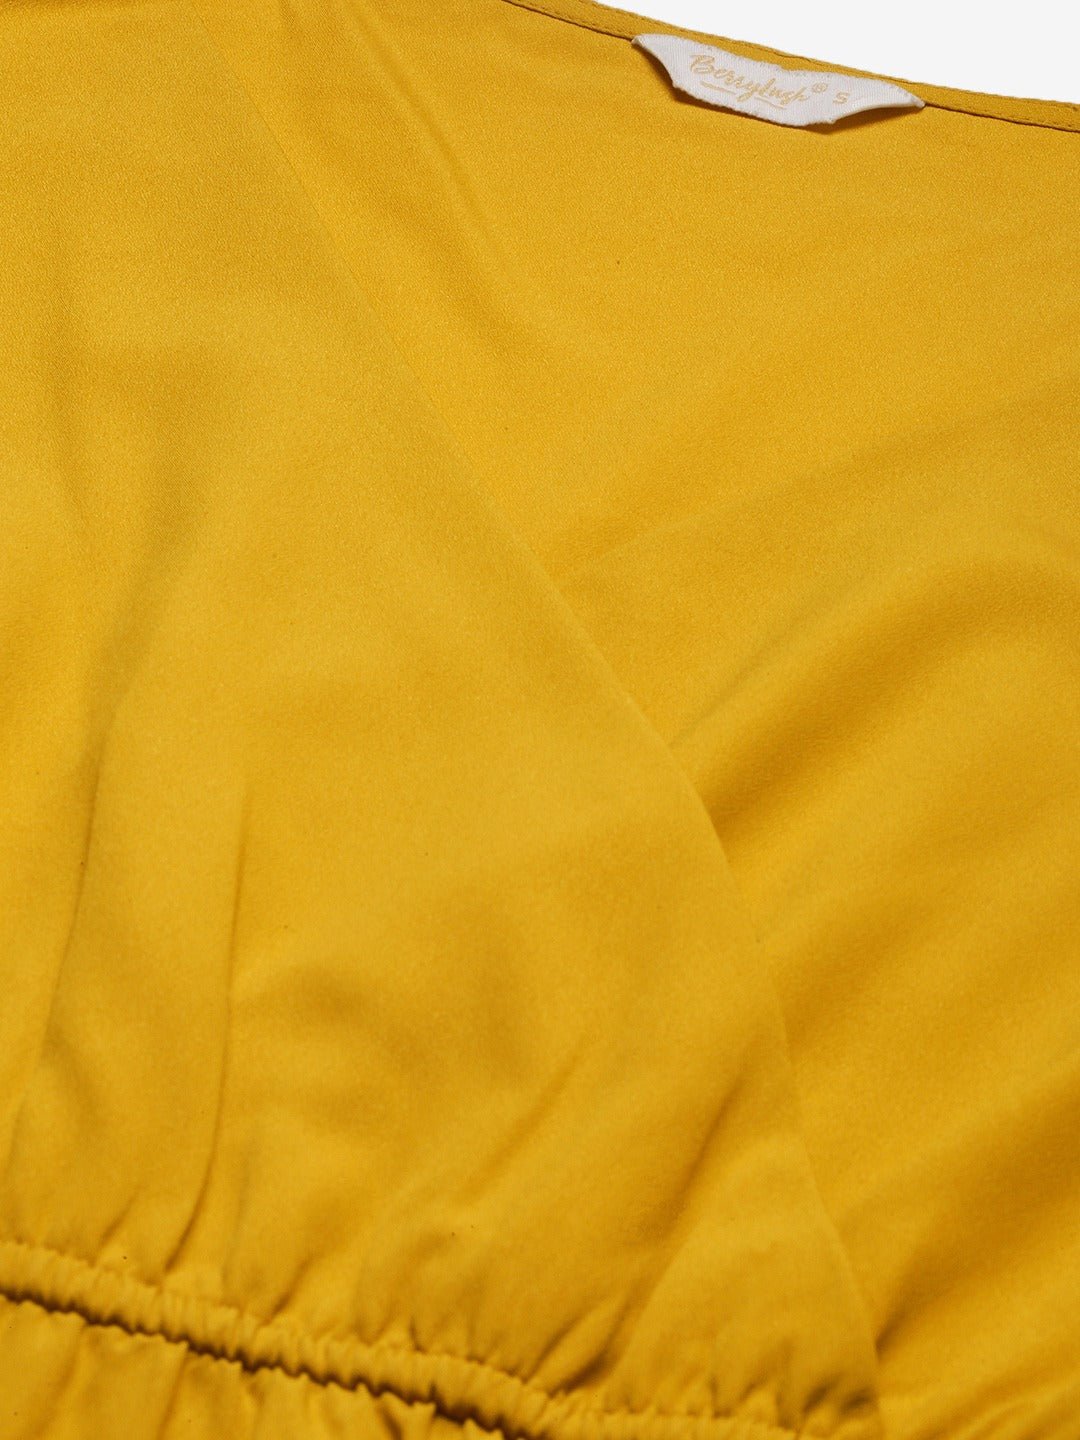 Folk Republic Women Solid Yellow V-Neck Short Sleeve Maxi Dress - #folk republic#